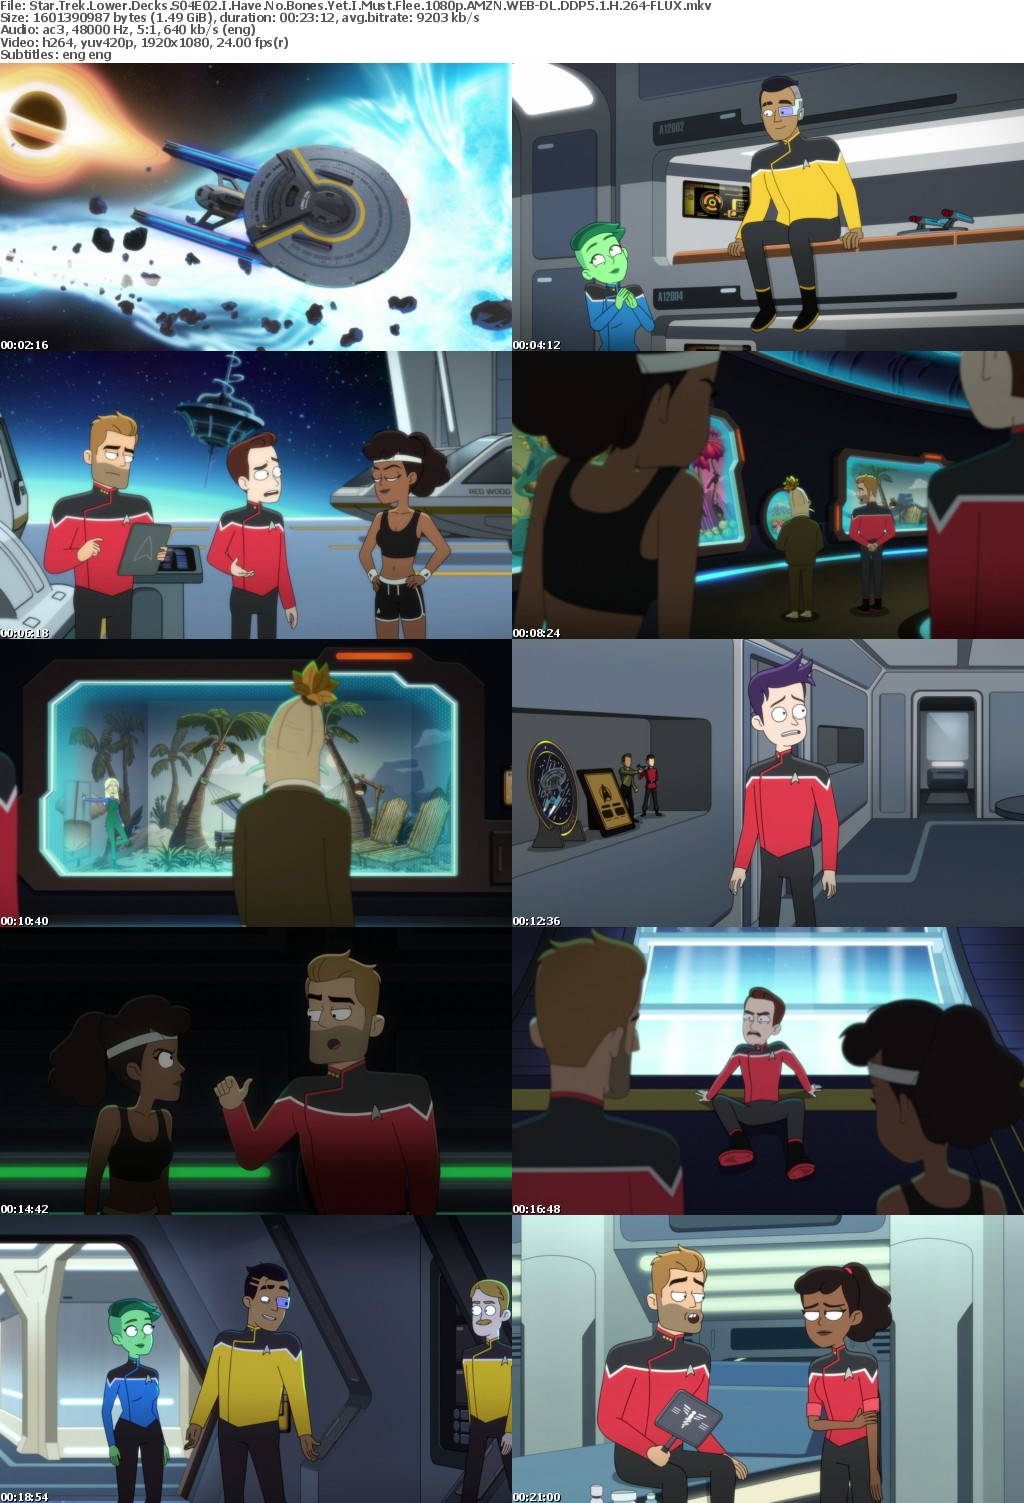 Star Trek Lower Decks S04E02 I Have No Bones Yet I Must Flee 1080p AMZN WEB-DL DDP5 1 H 264-FLUX